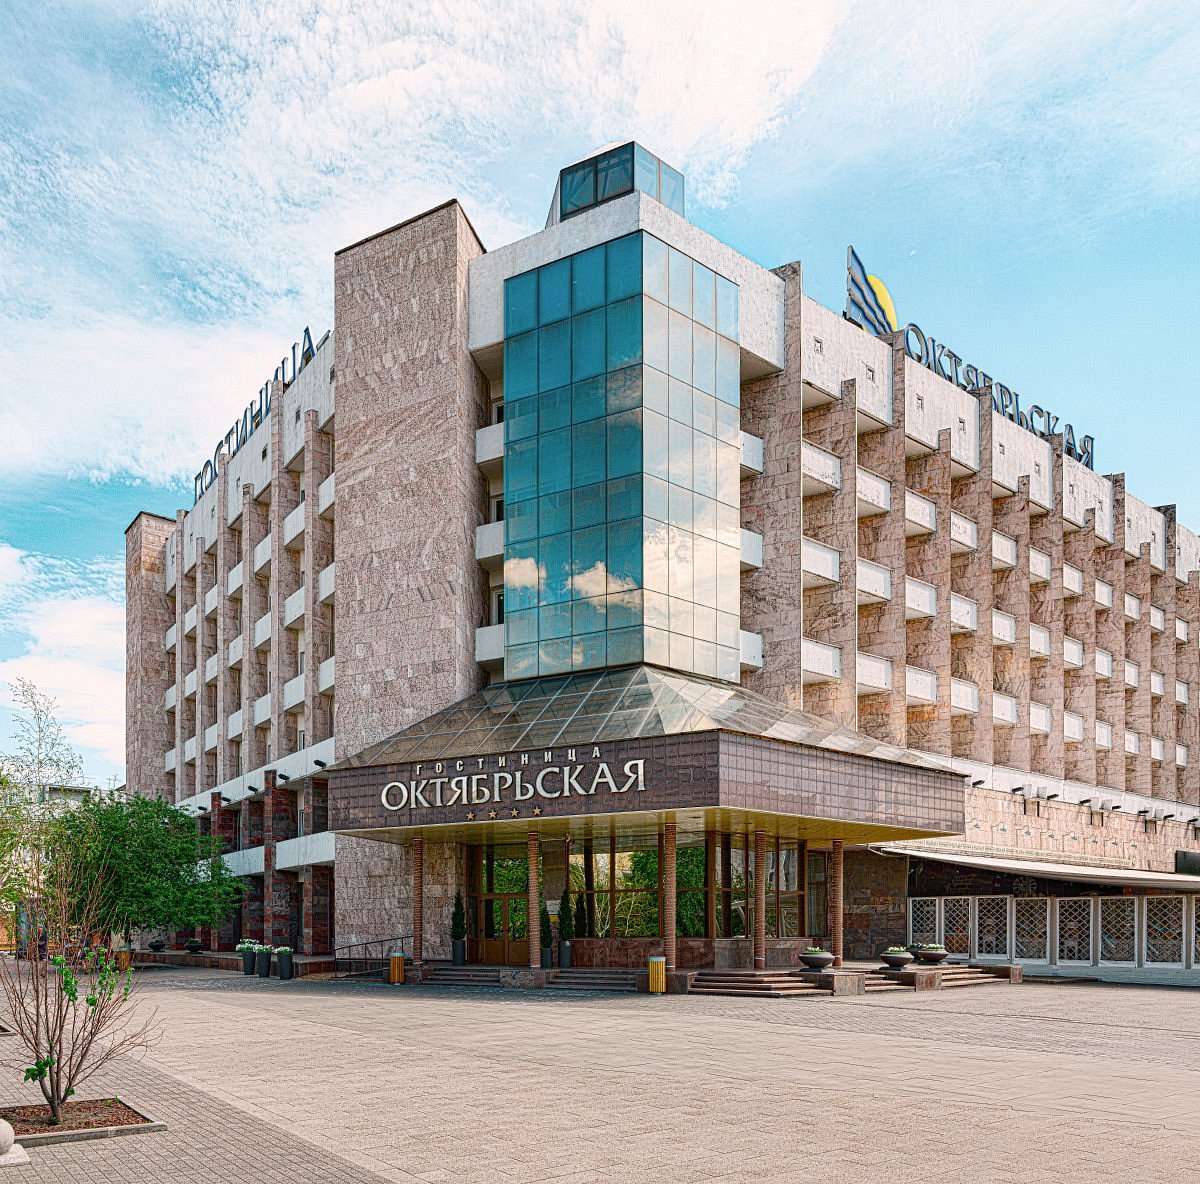 OKTYABRSKAYA HOTEL (Krasnoyarsk, Siberian District) - Hotel Reviews